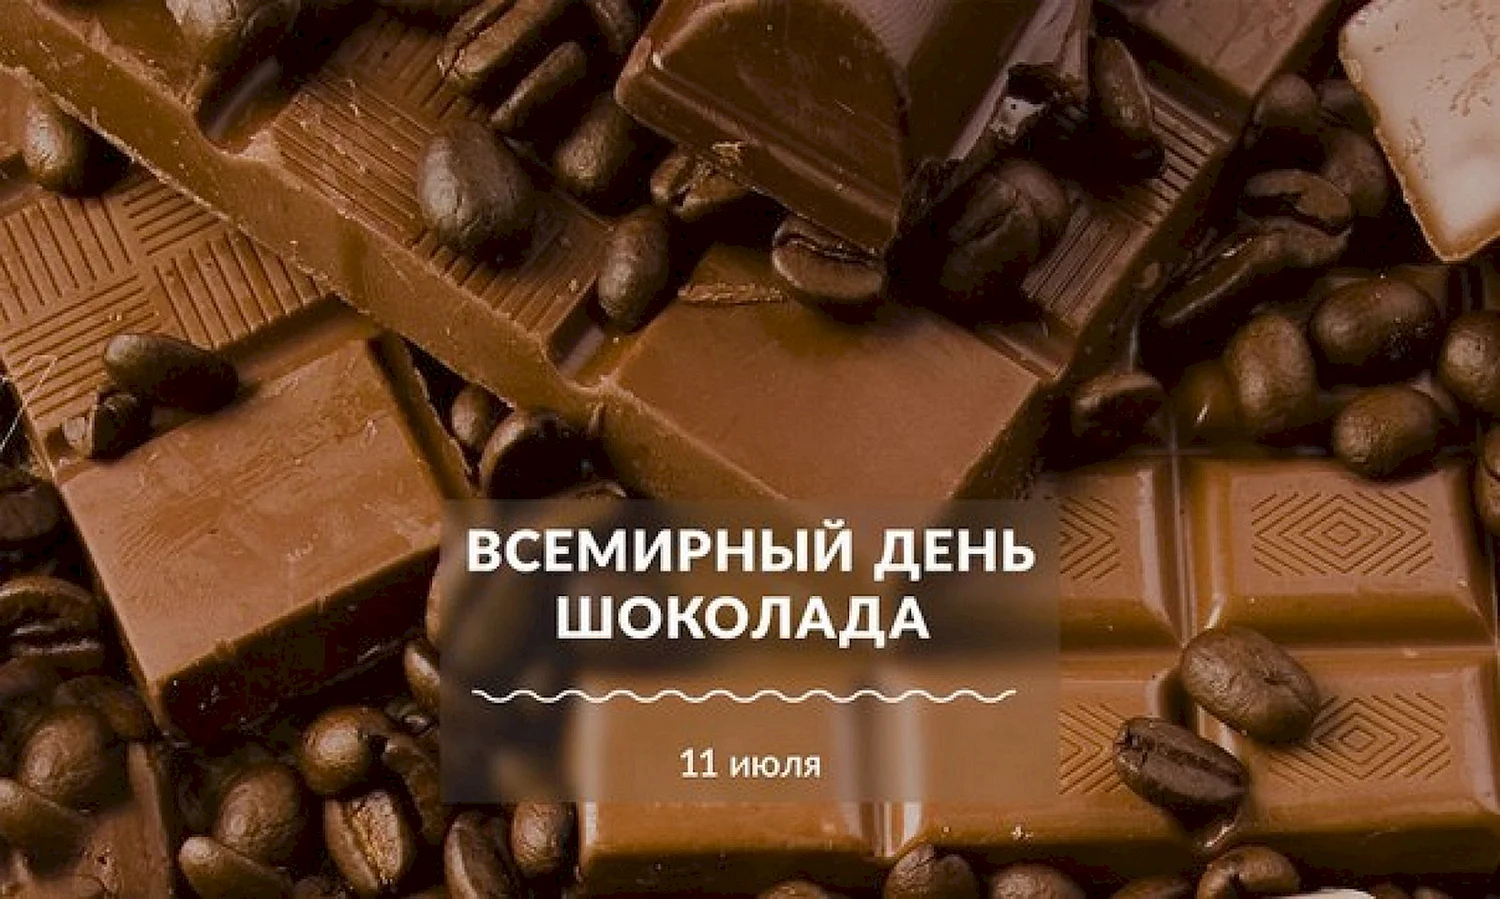 Всемирный день шоколада (World Chocolate Day)